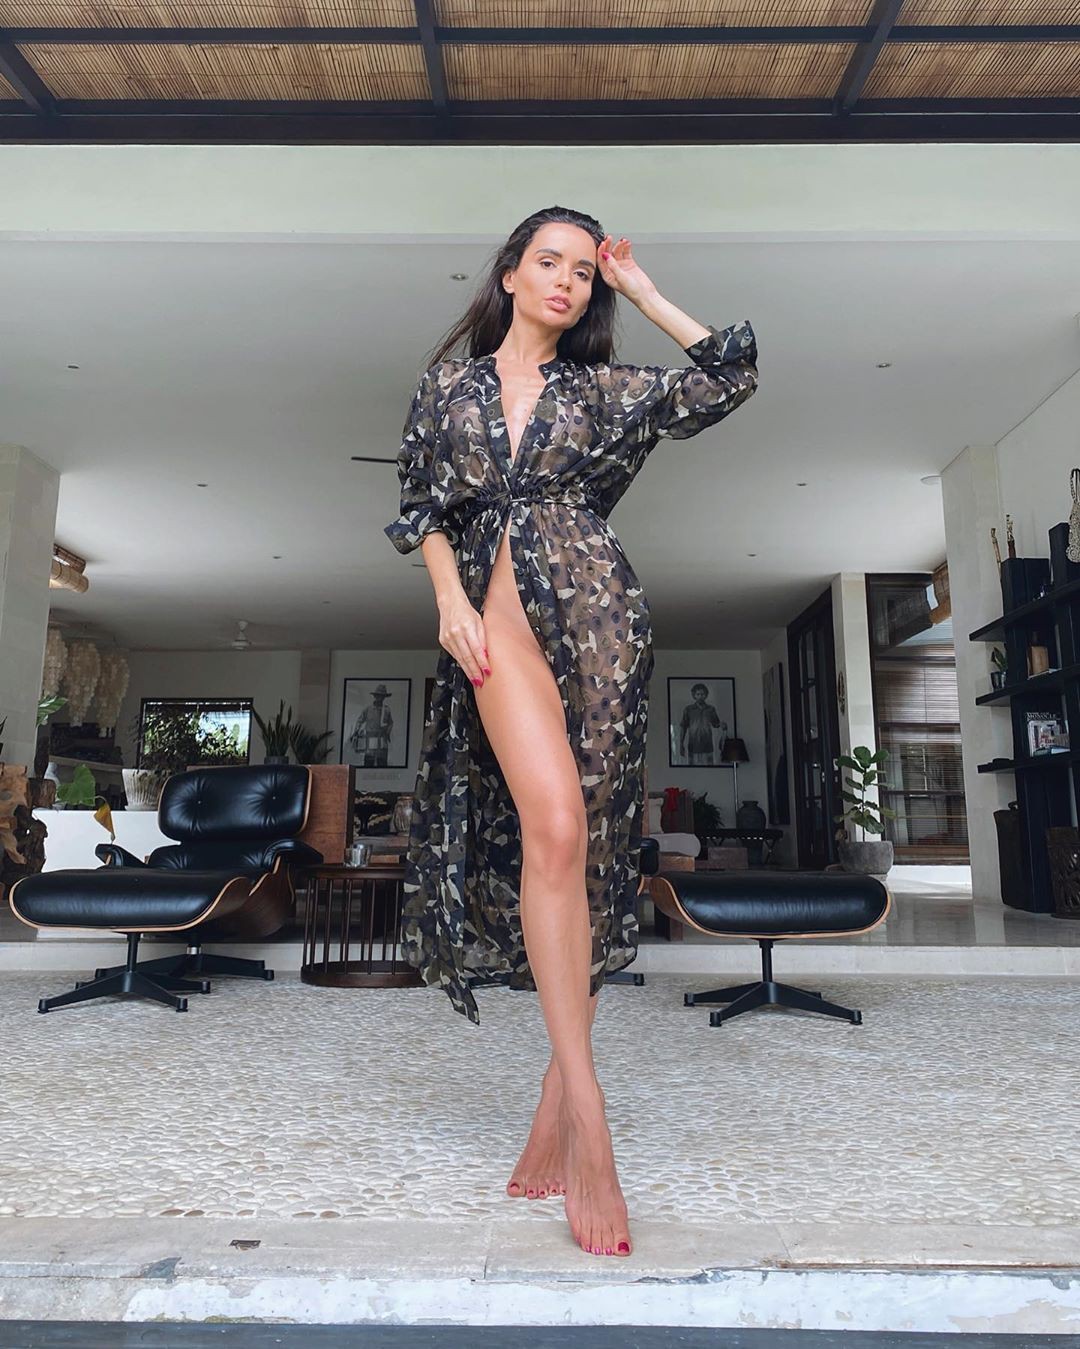 Ekaterina Zueva dress colour ideas, photoshoot ideas, legs pic: Fashion photography,  fashion model,  Long hair,  Sexy Outfits,  Instagram girls  